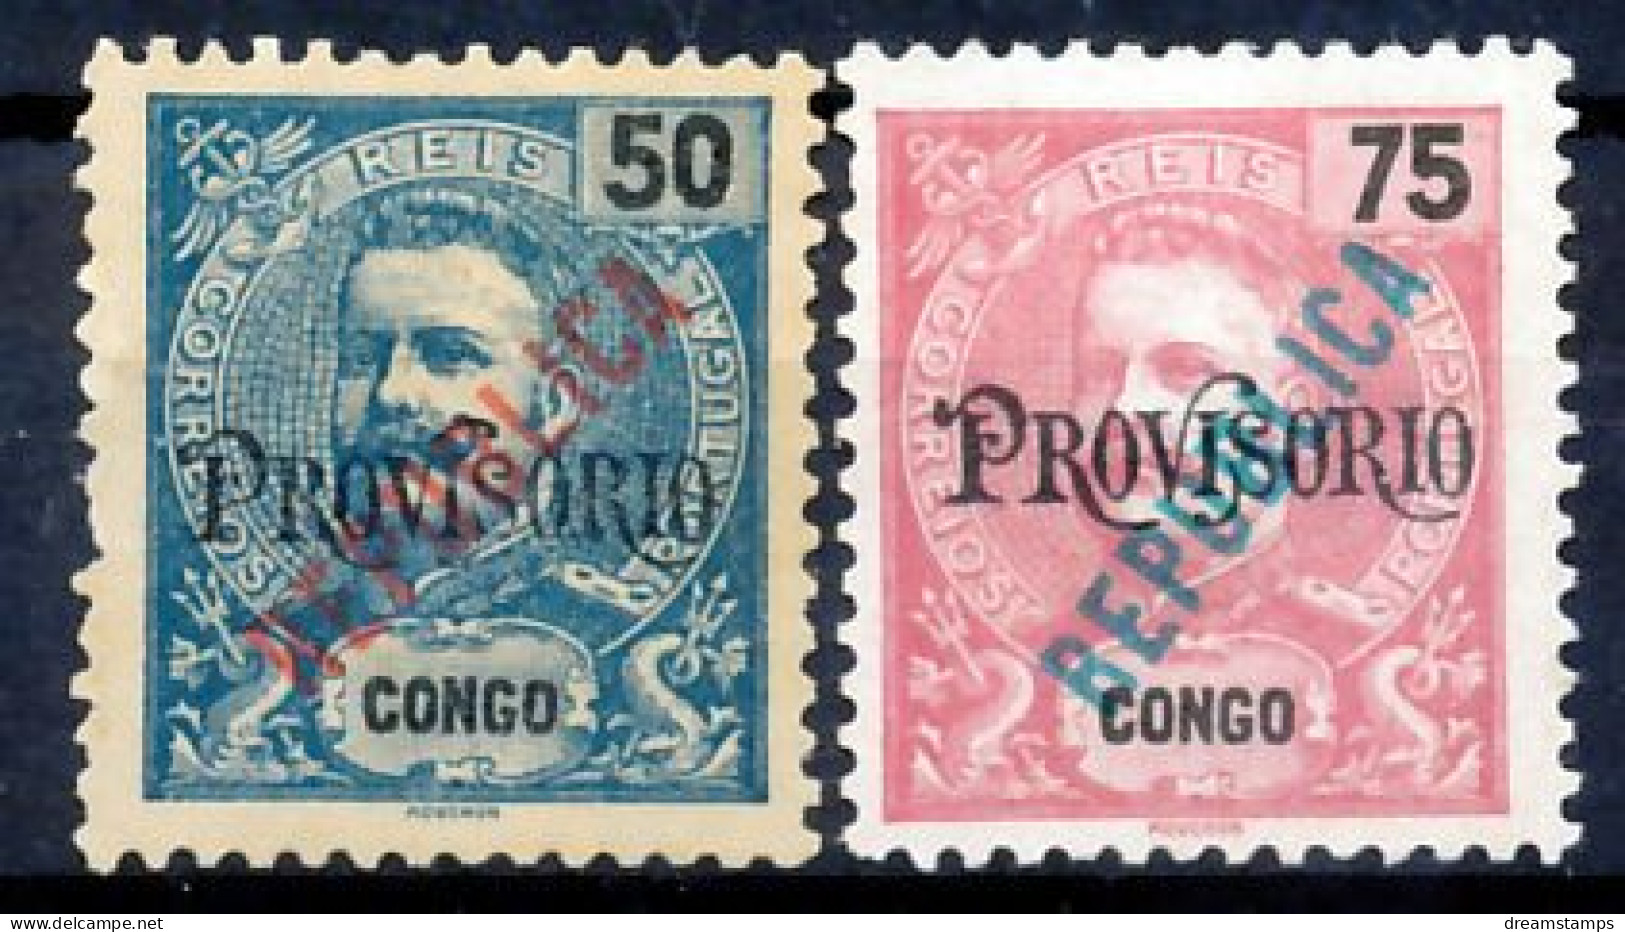 !										■■■■■ds■■ Congo 1914 AF#121-122 (*) Local Ovp "republica" On "provisório" (x13193) - Congo Portuguesa